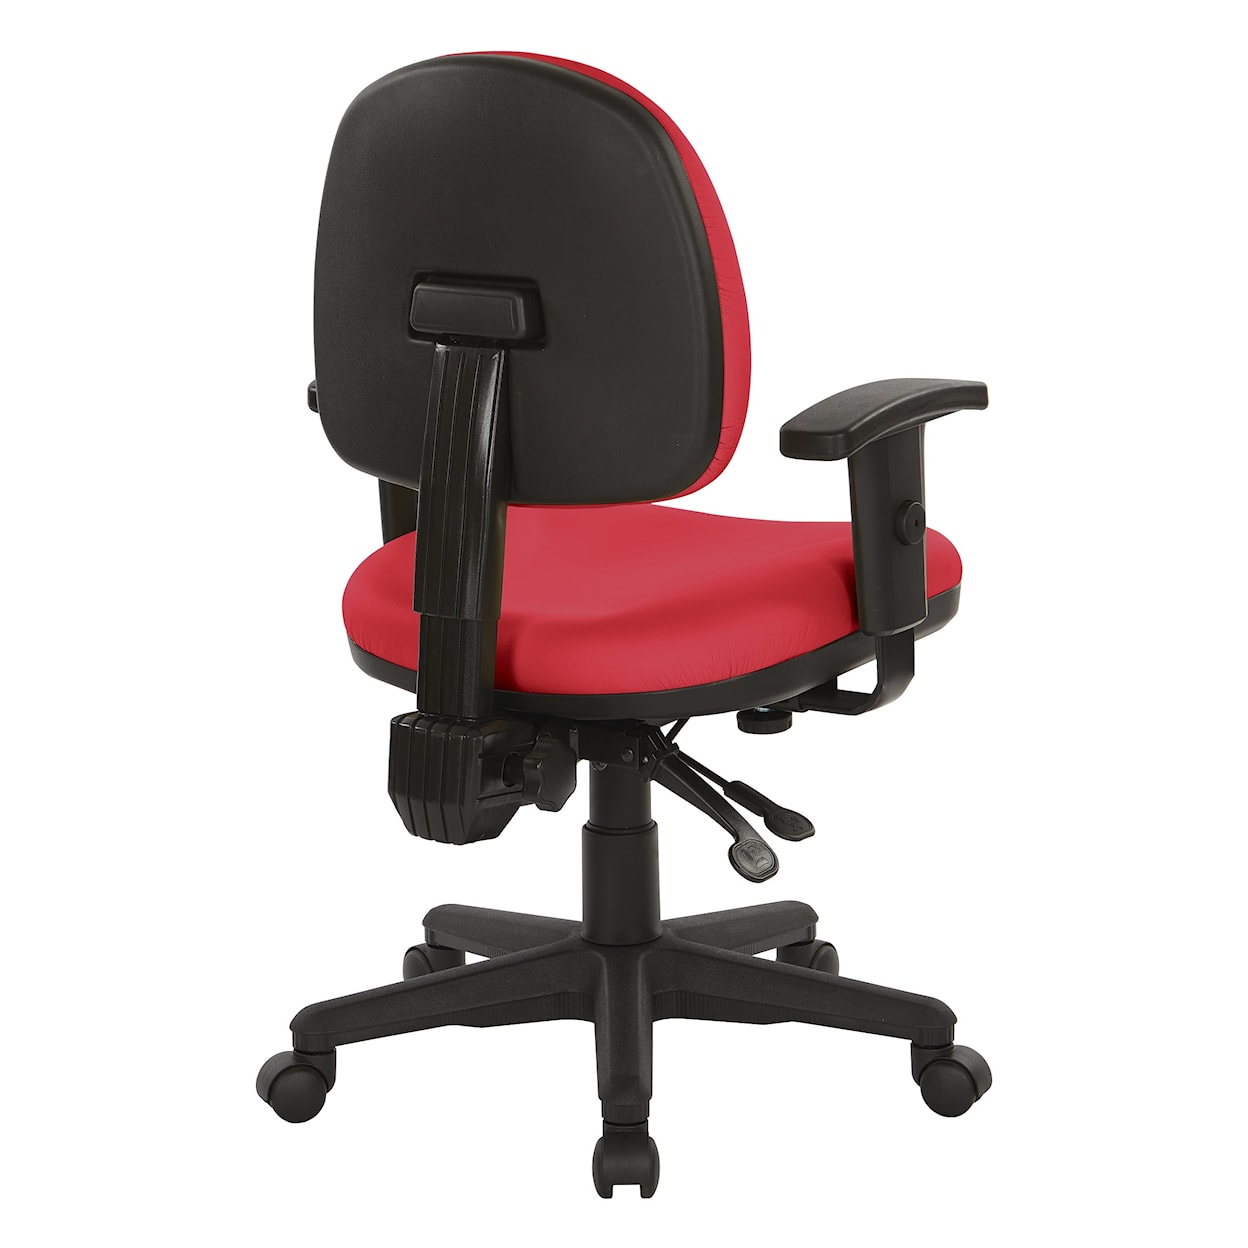 Office Star Ergonomic Fabric Office Chair